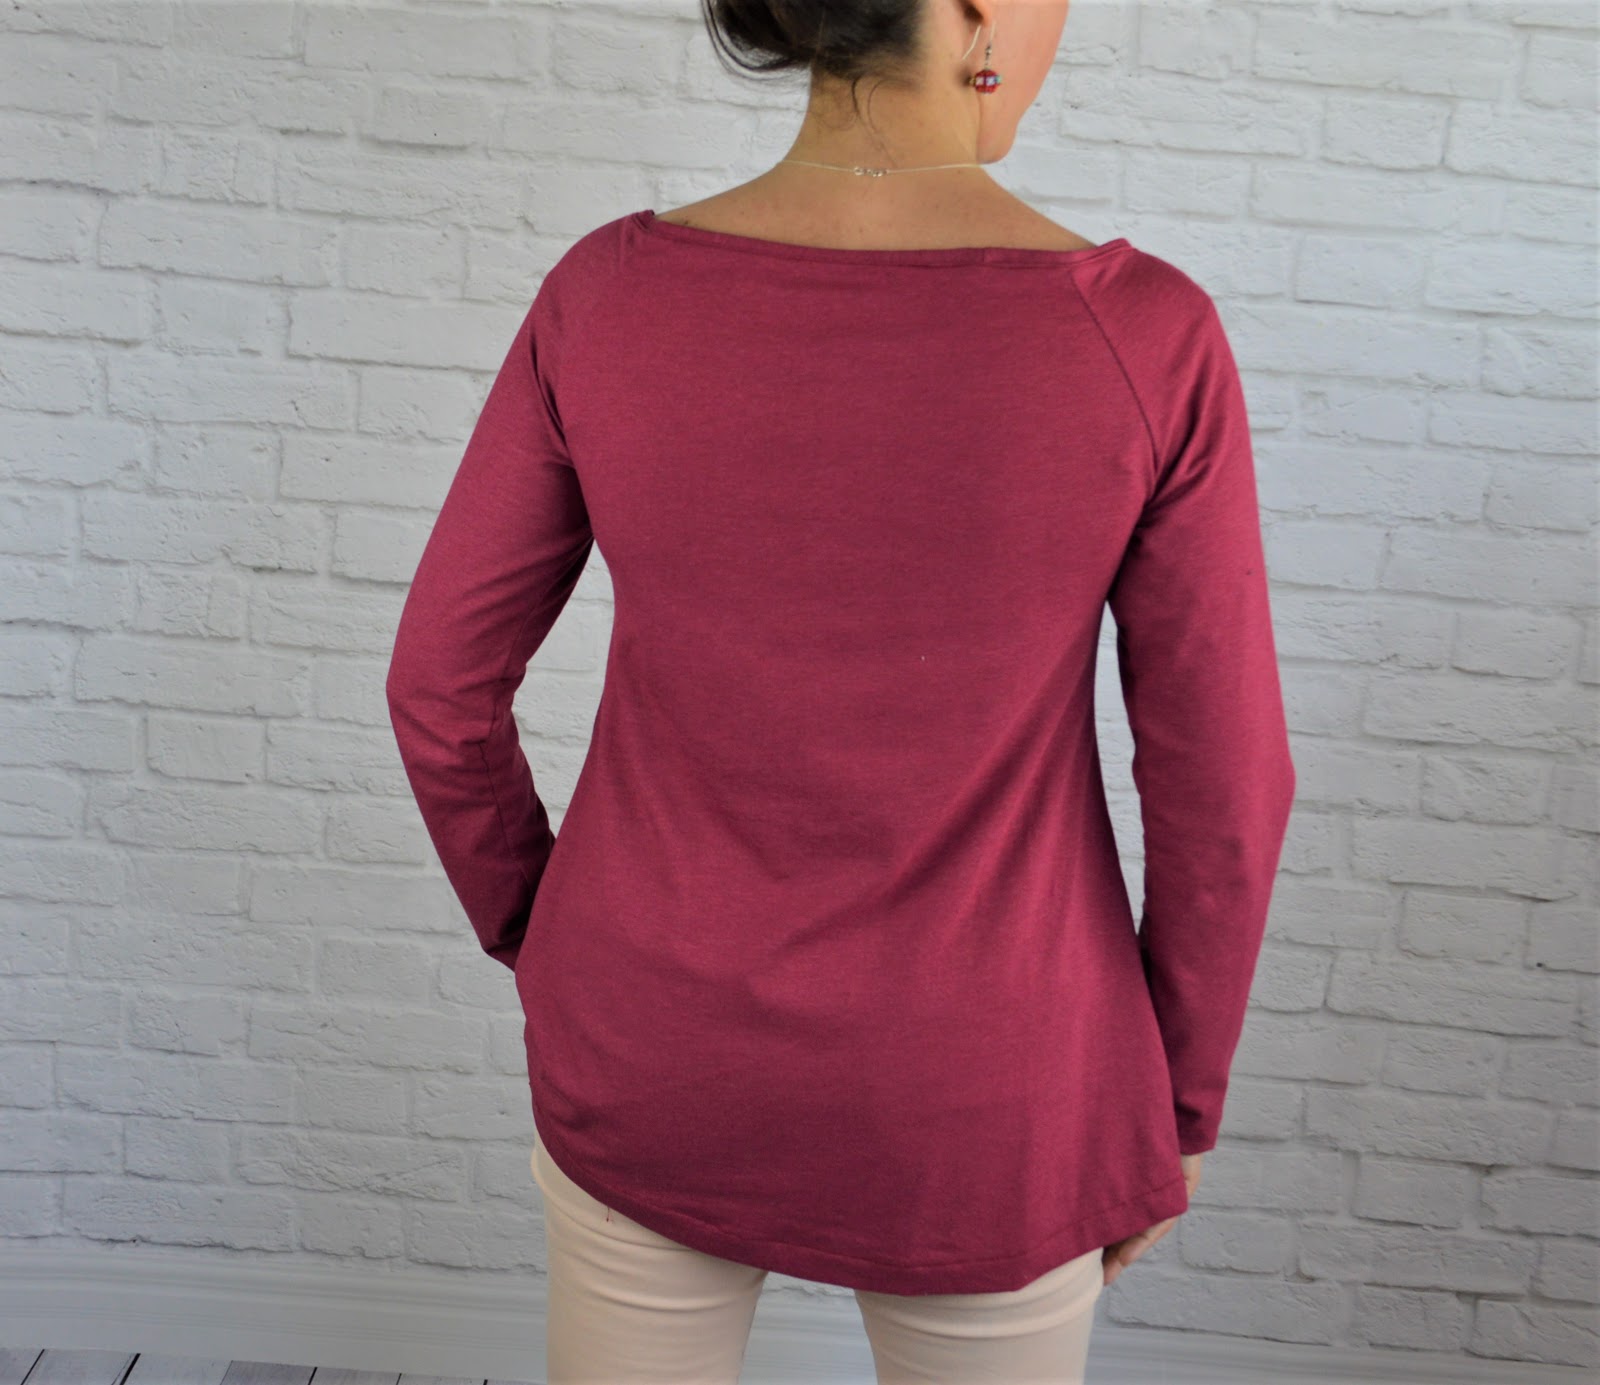 Camiseta printed lace ottobre design para mujer